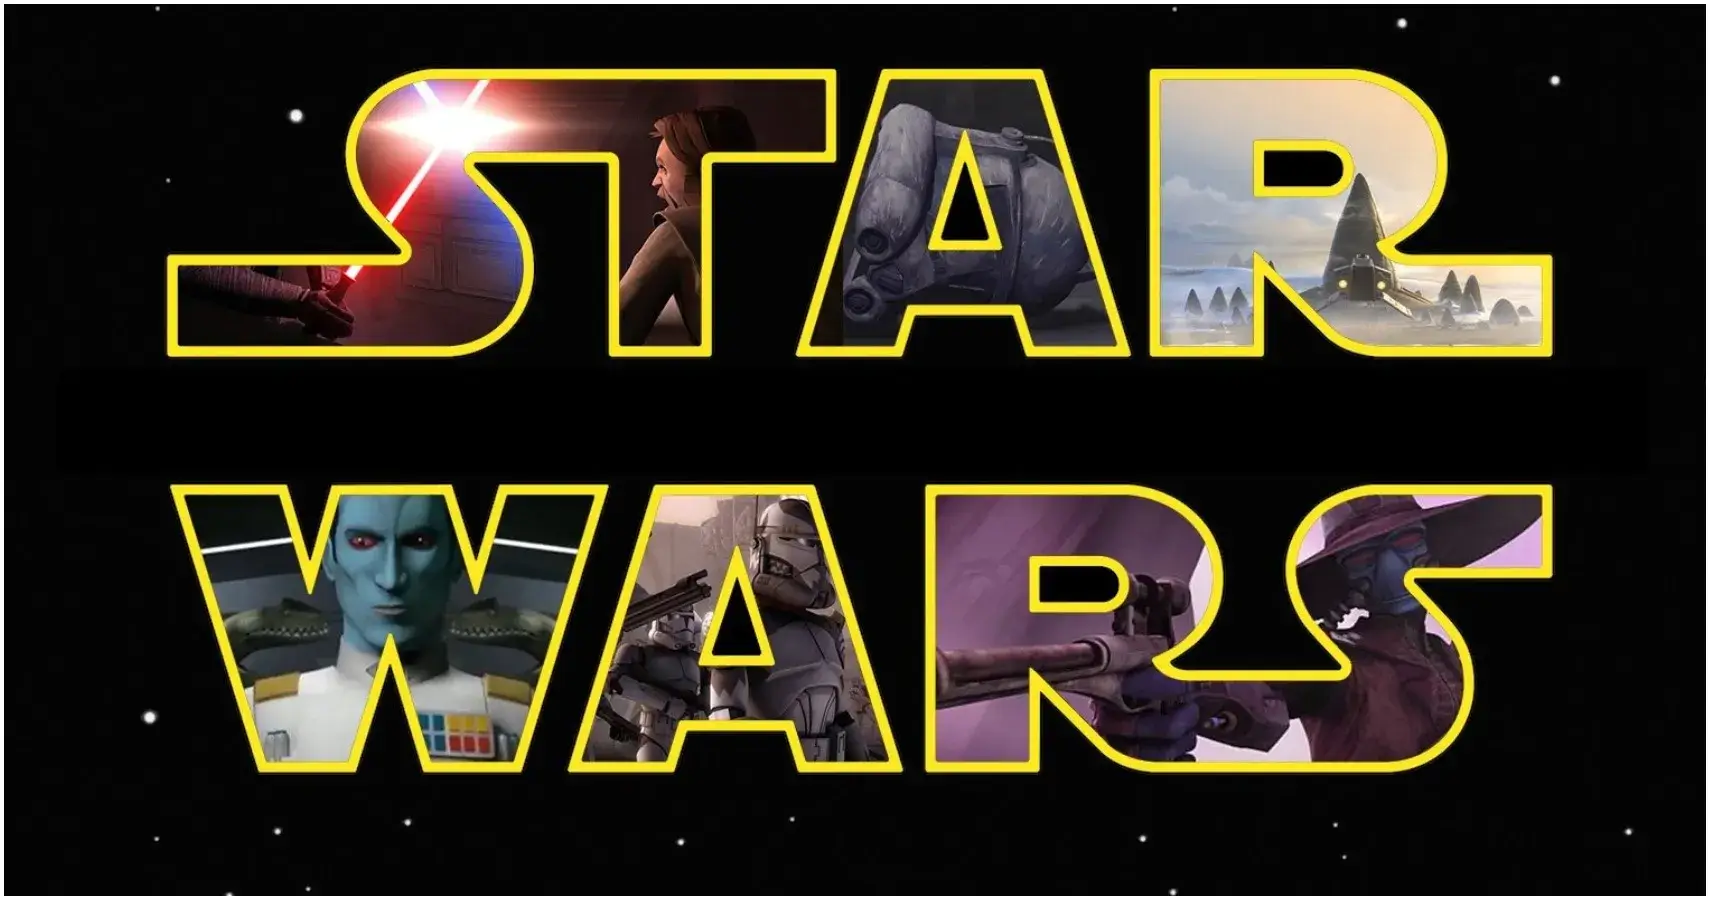 Star Wars poster.